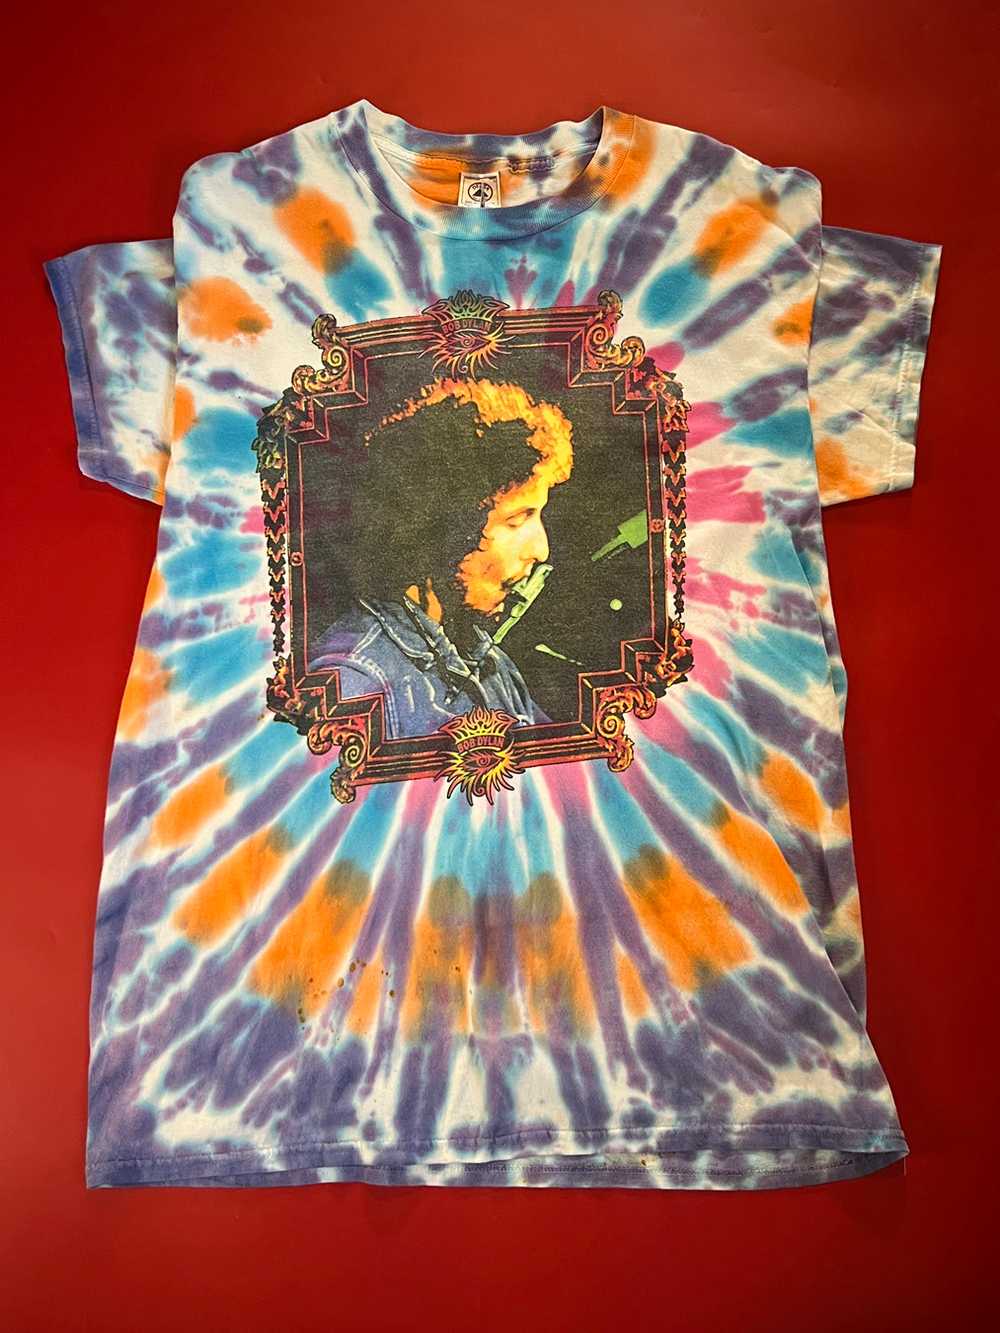 2001 Bob Dylan Tour Shirt - image 1